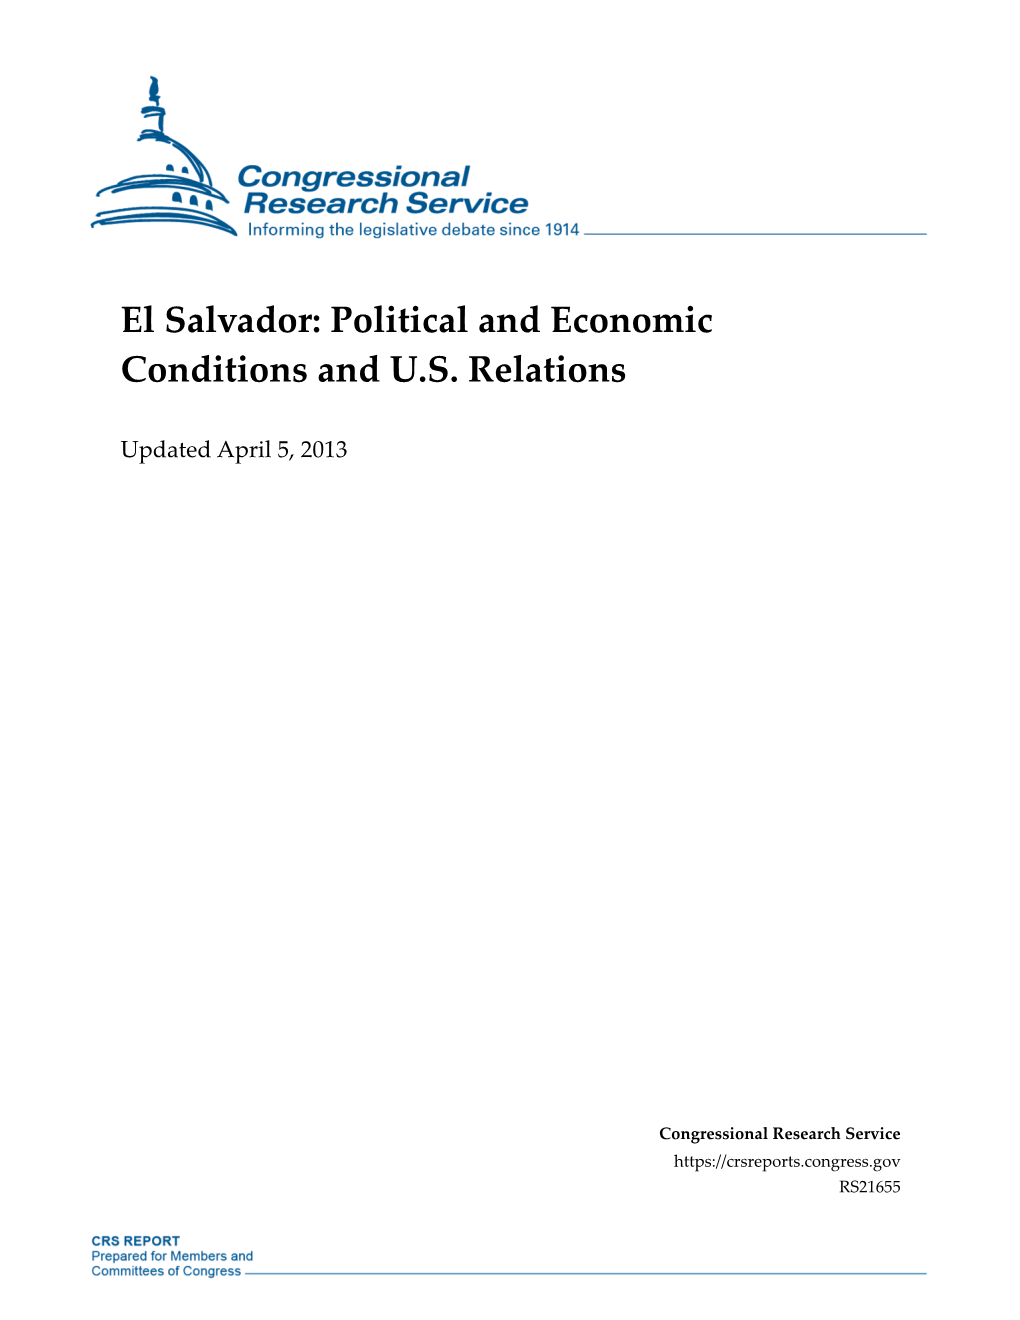 El Salvador: Political and Economic Conditions and U.S